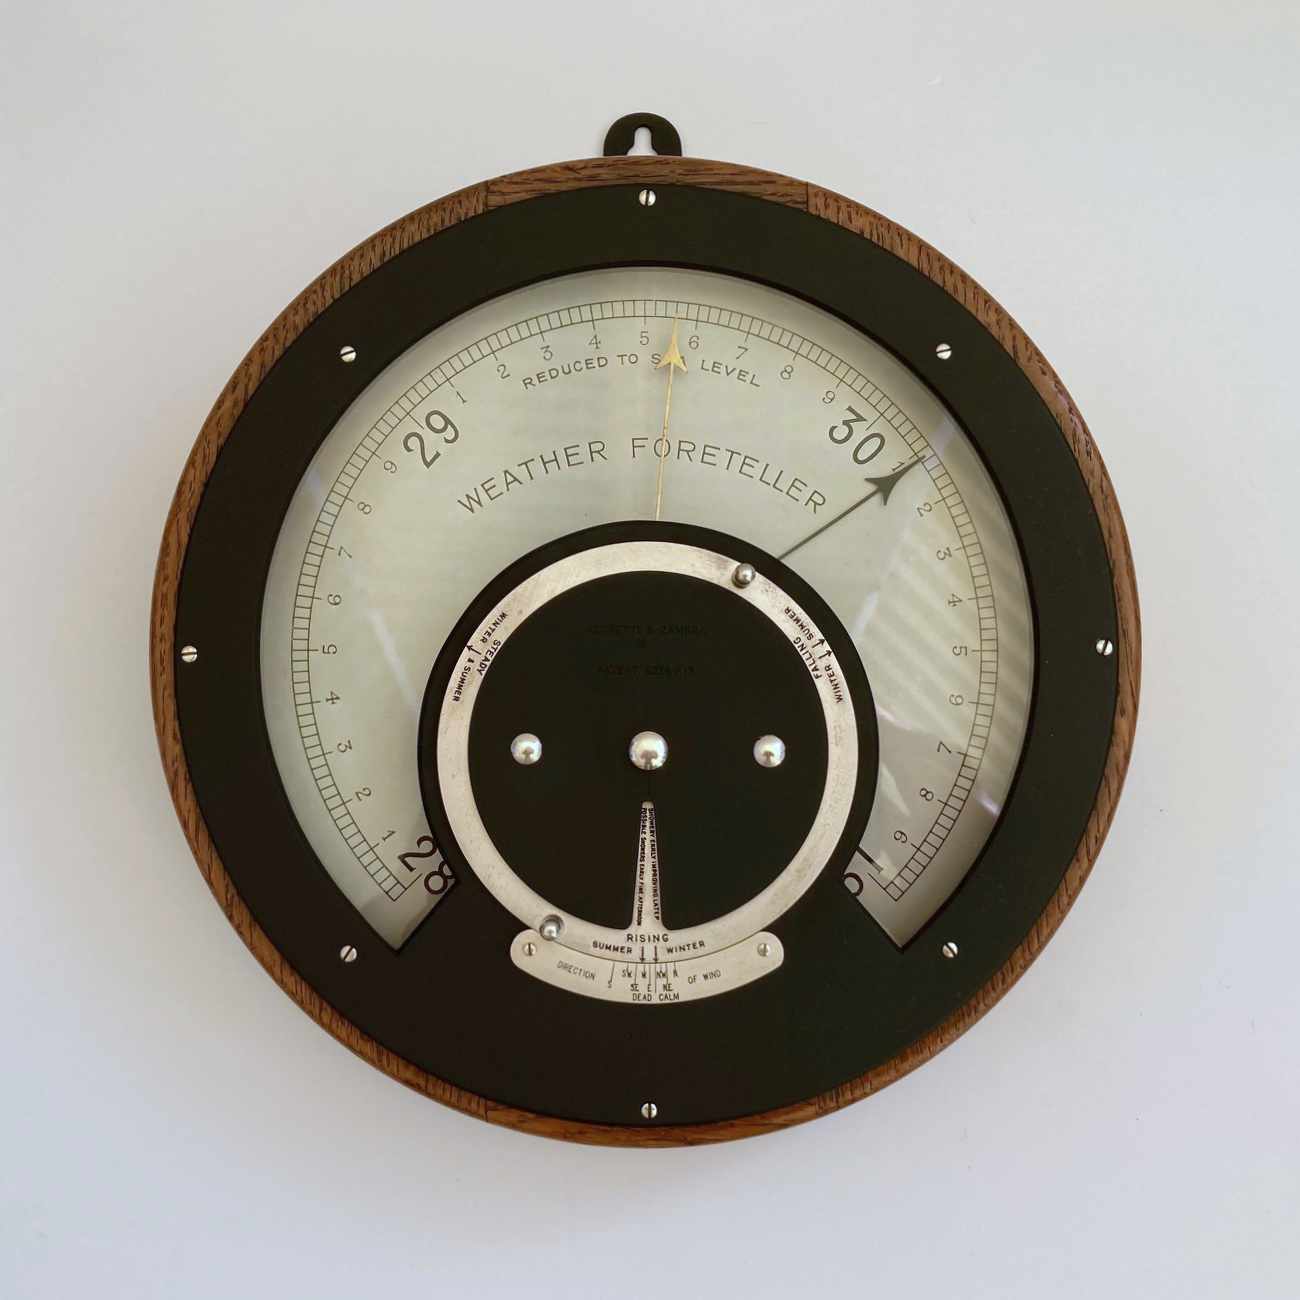 Early Twentieth Century Weather Foreteller Aneroid Barometer by Negretti & Zambra